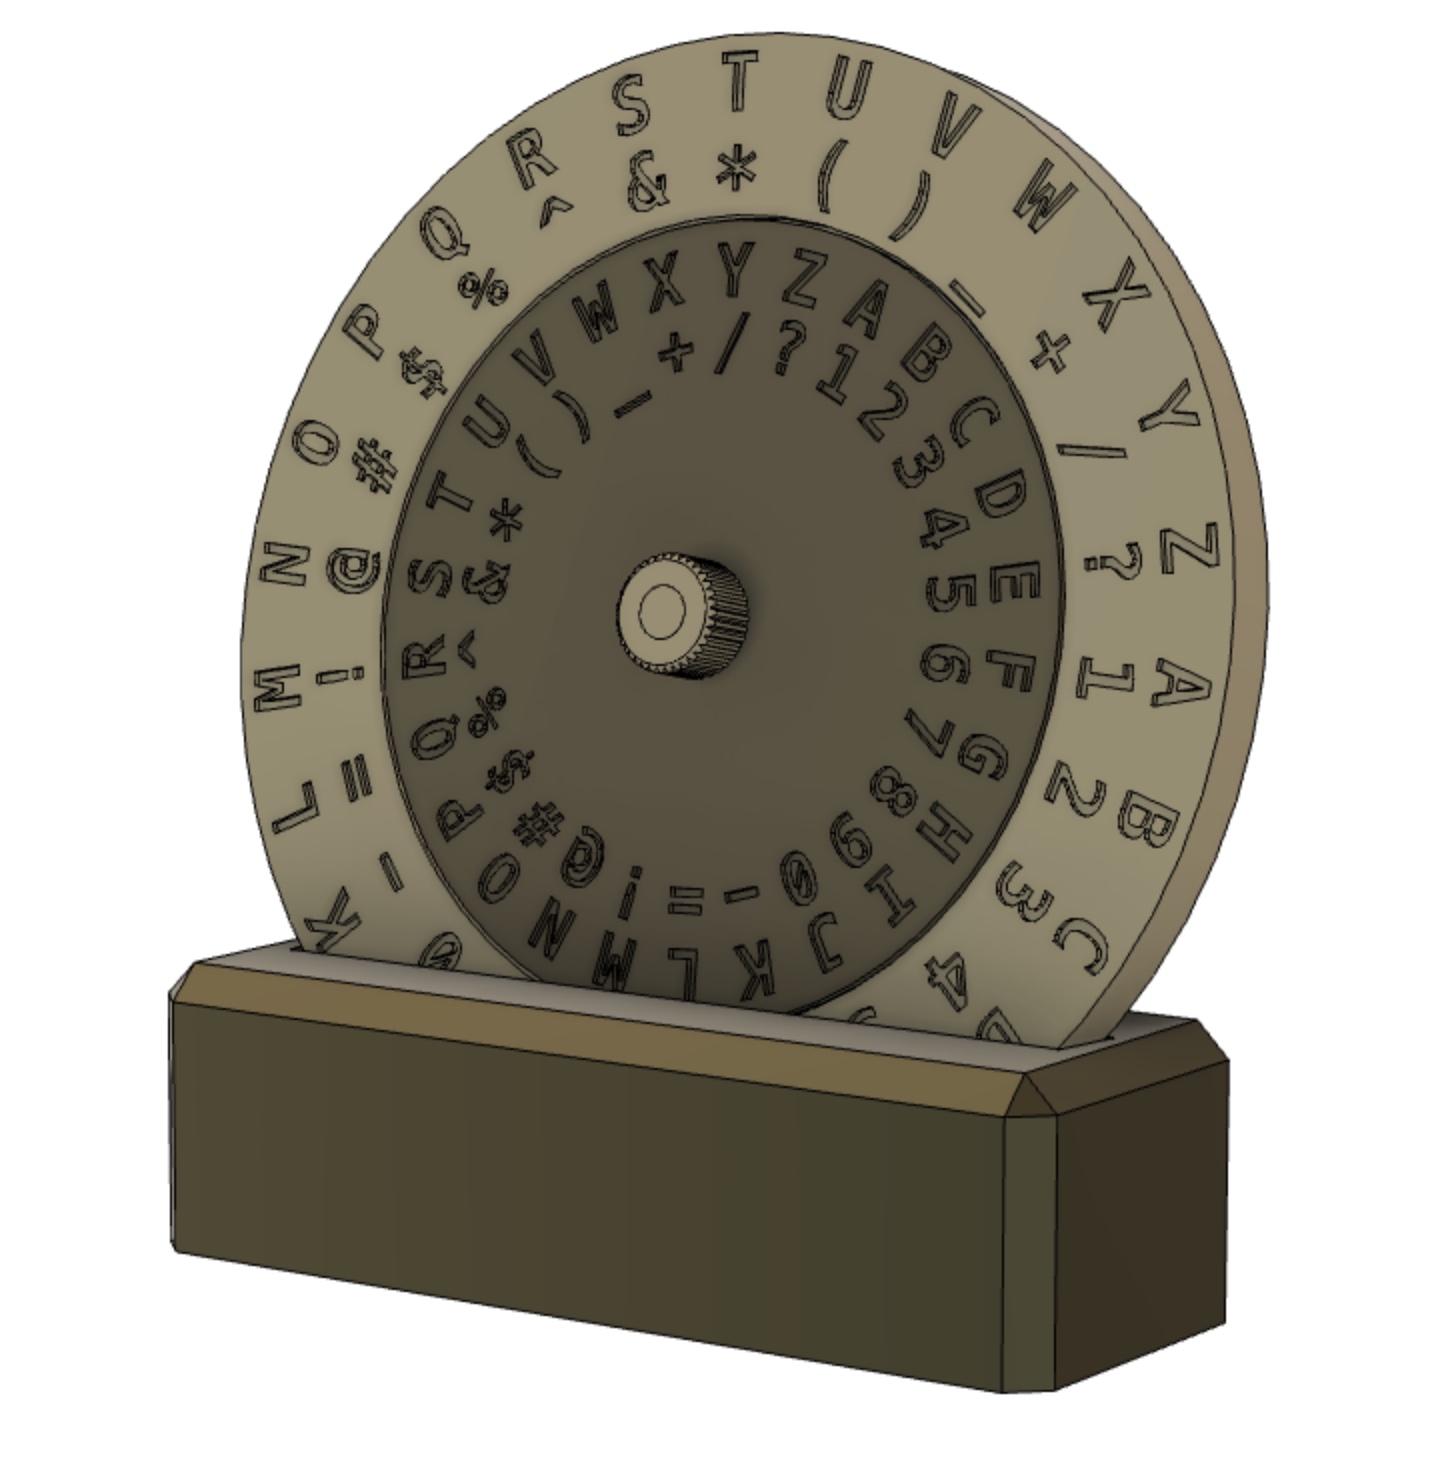 Caesar Shift Cipher Wheel